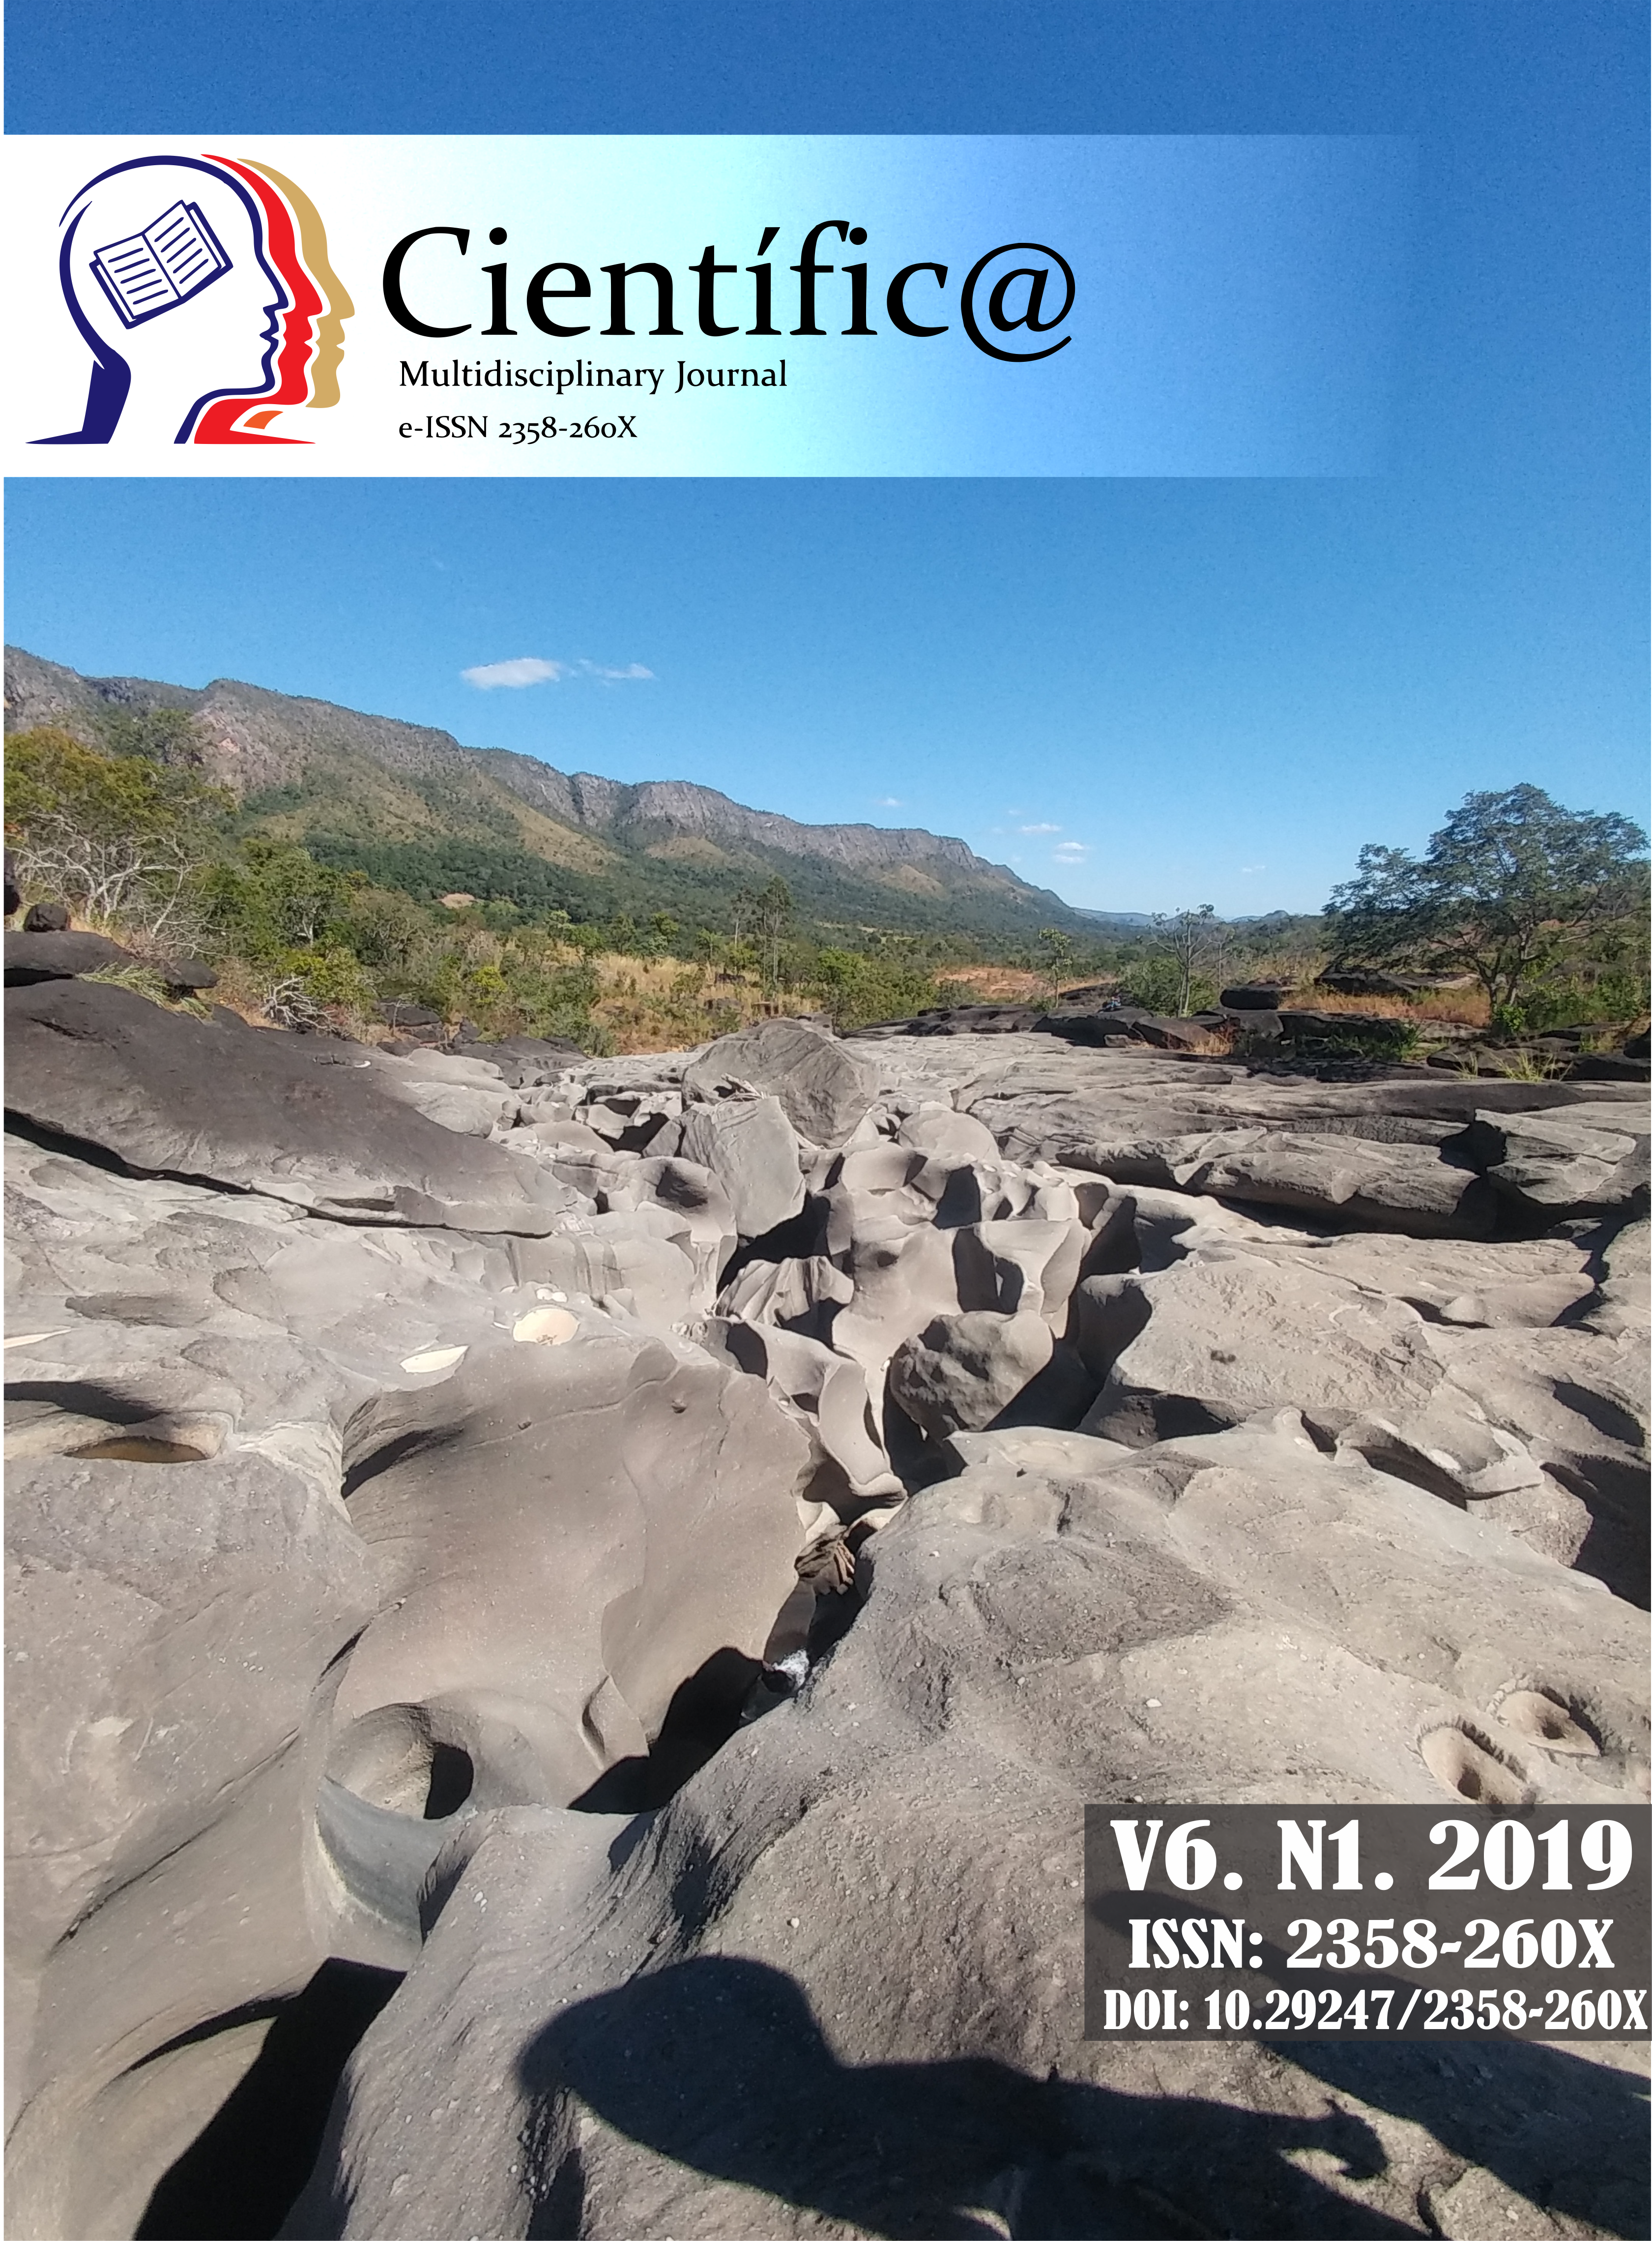 					View Vol. 6 No. 1 (2019): Científic@ - Multidisciplinary Journal - ISSN 2358-260X
				